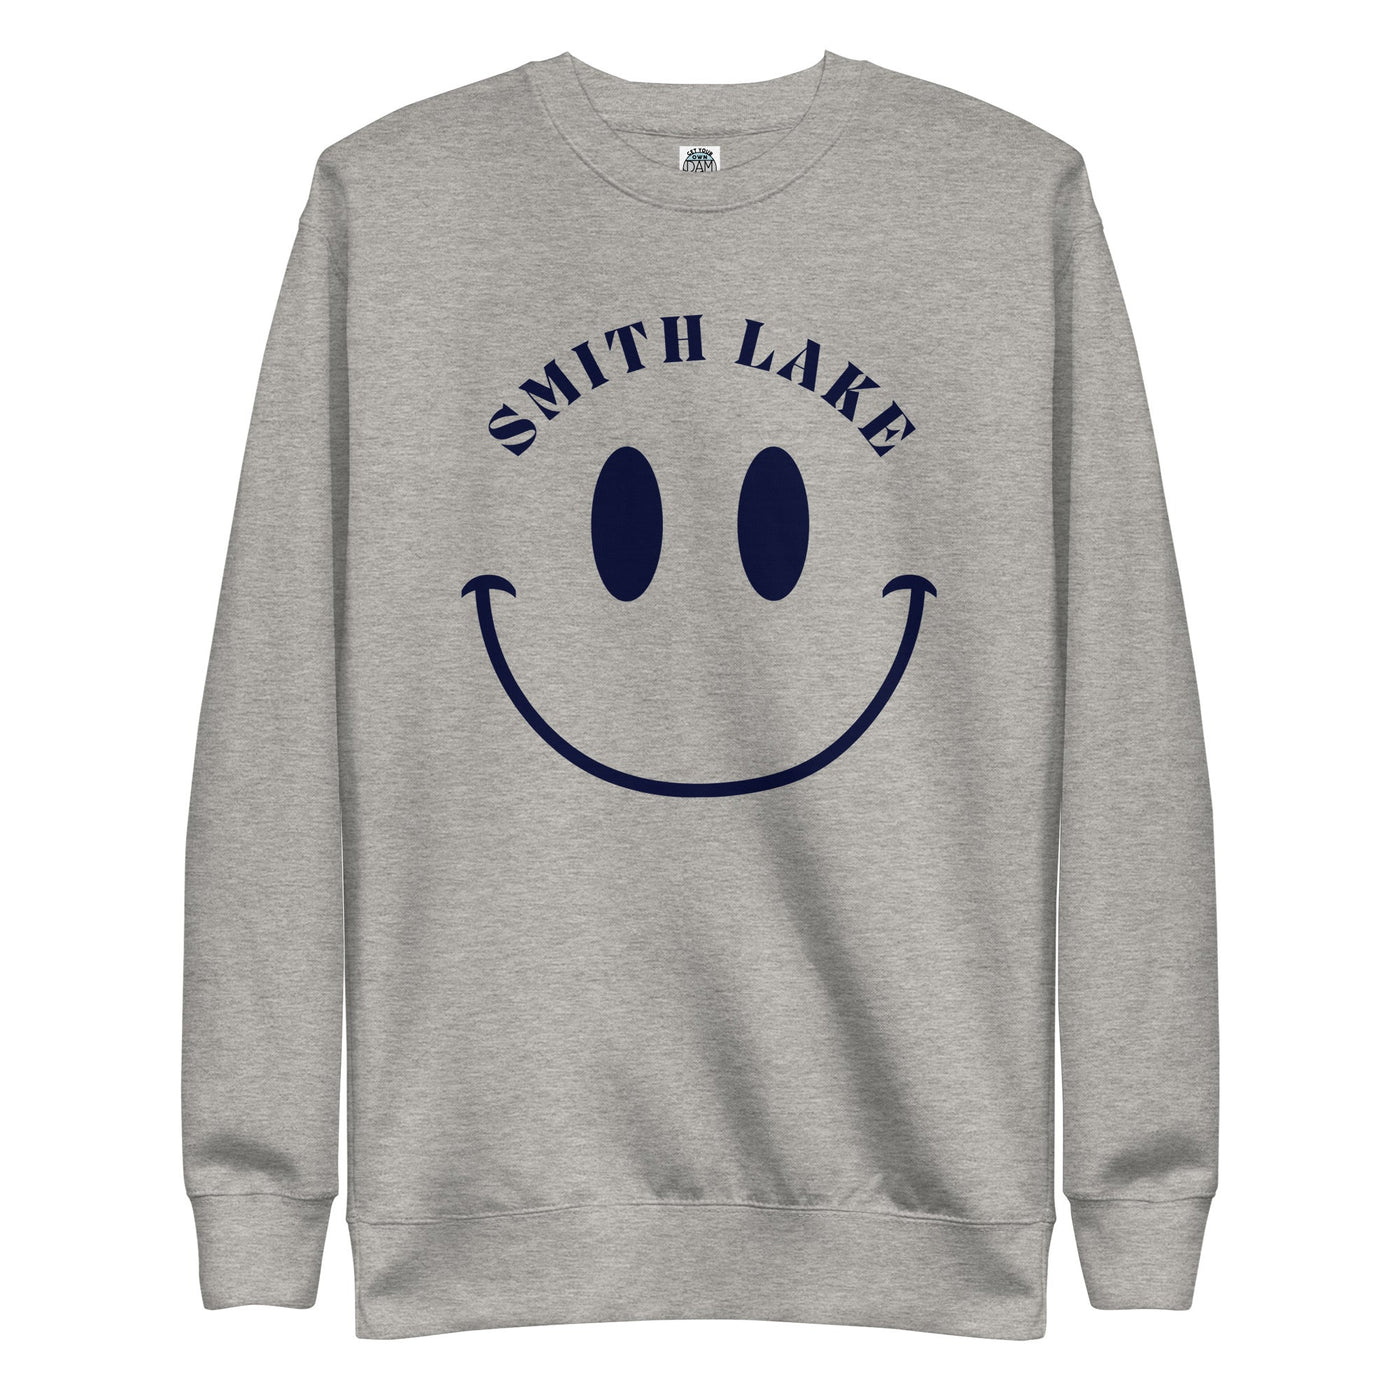 Smith Lake Smiley Face Print Sweatshirt - Ezra's Clothing